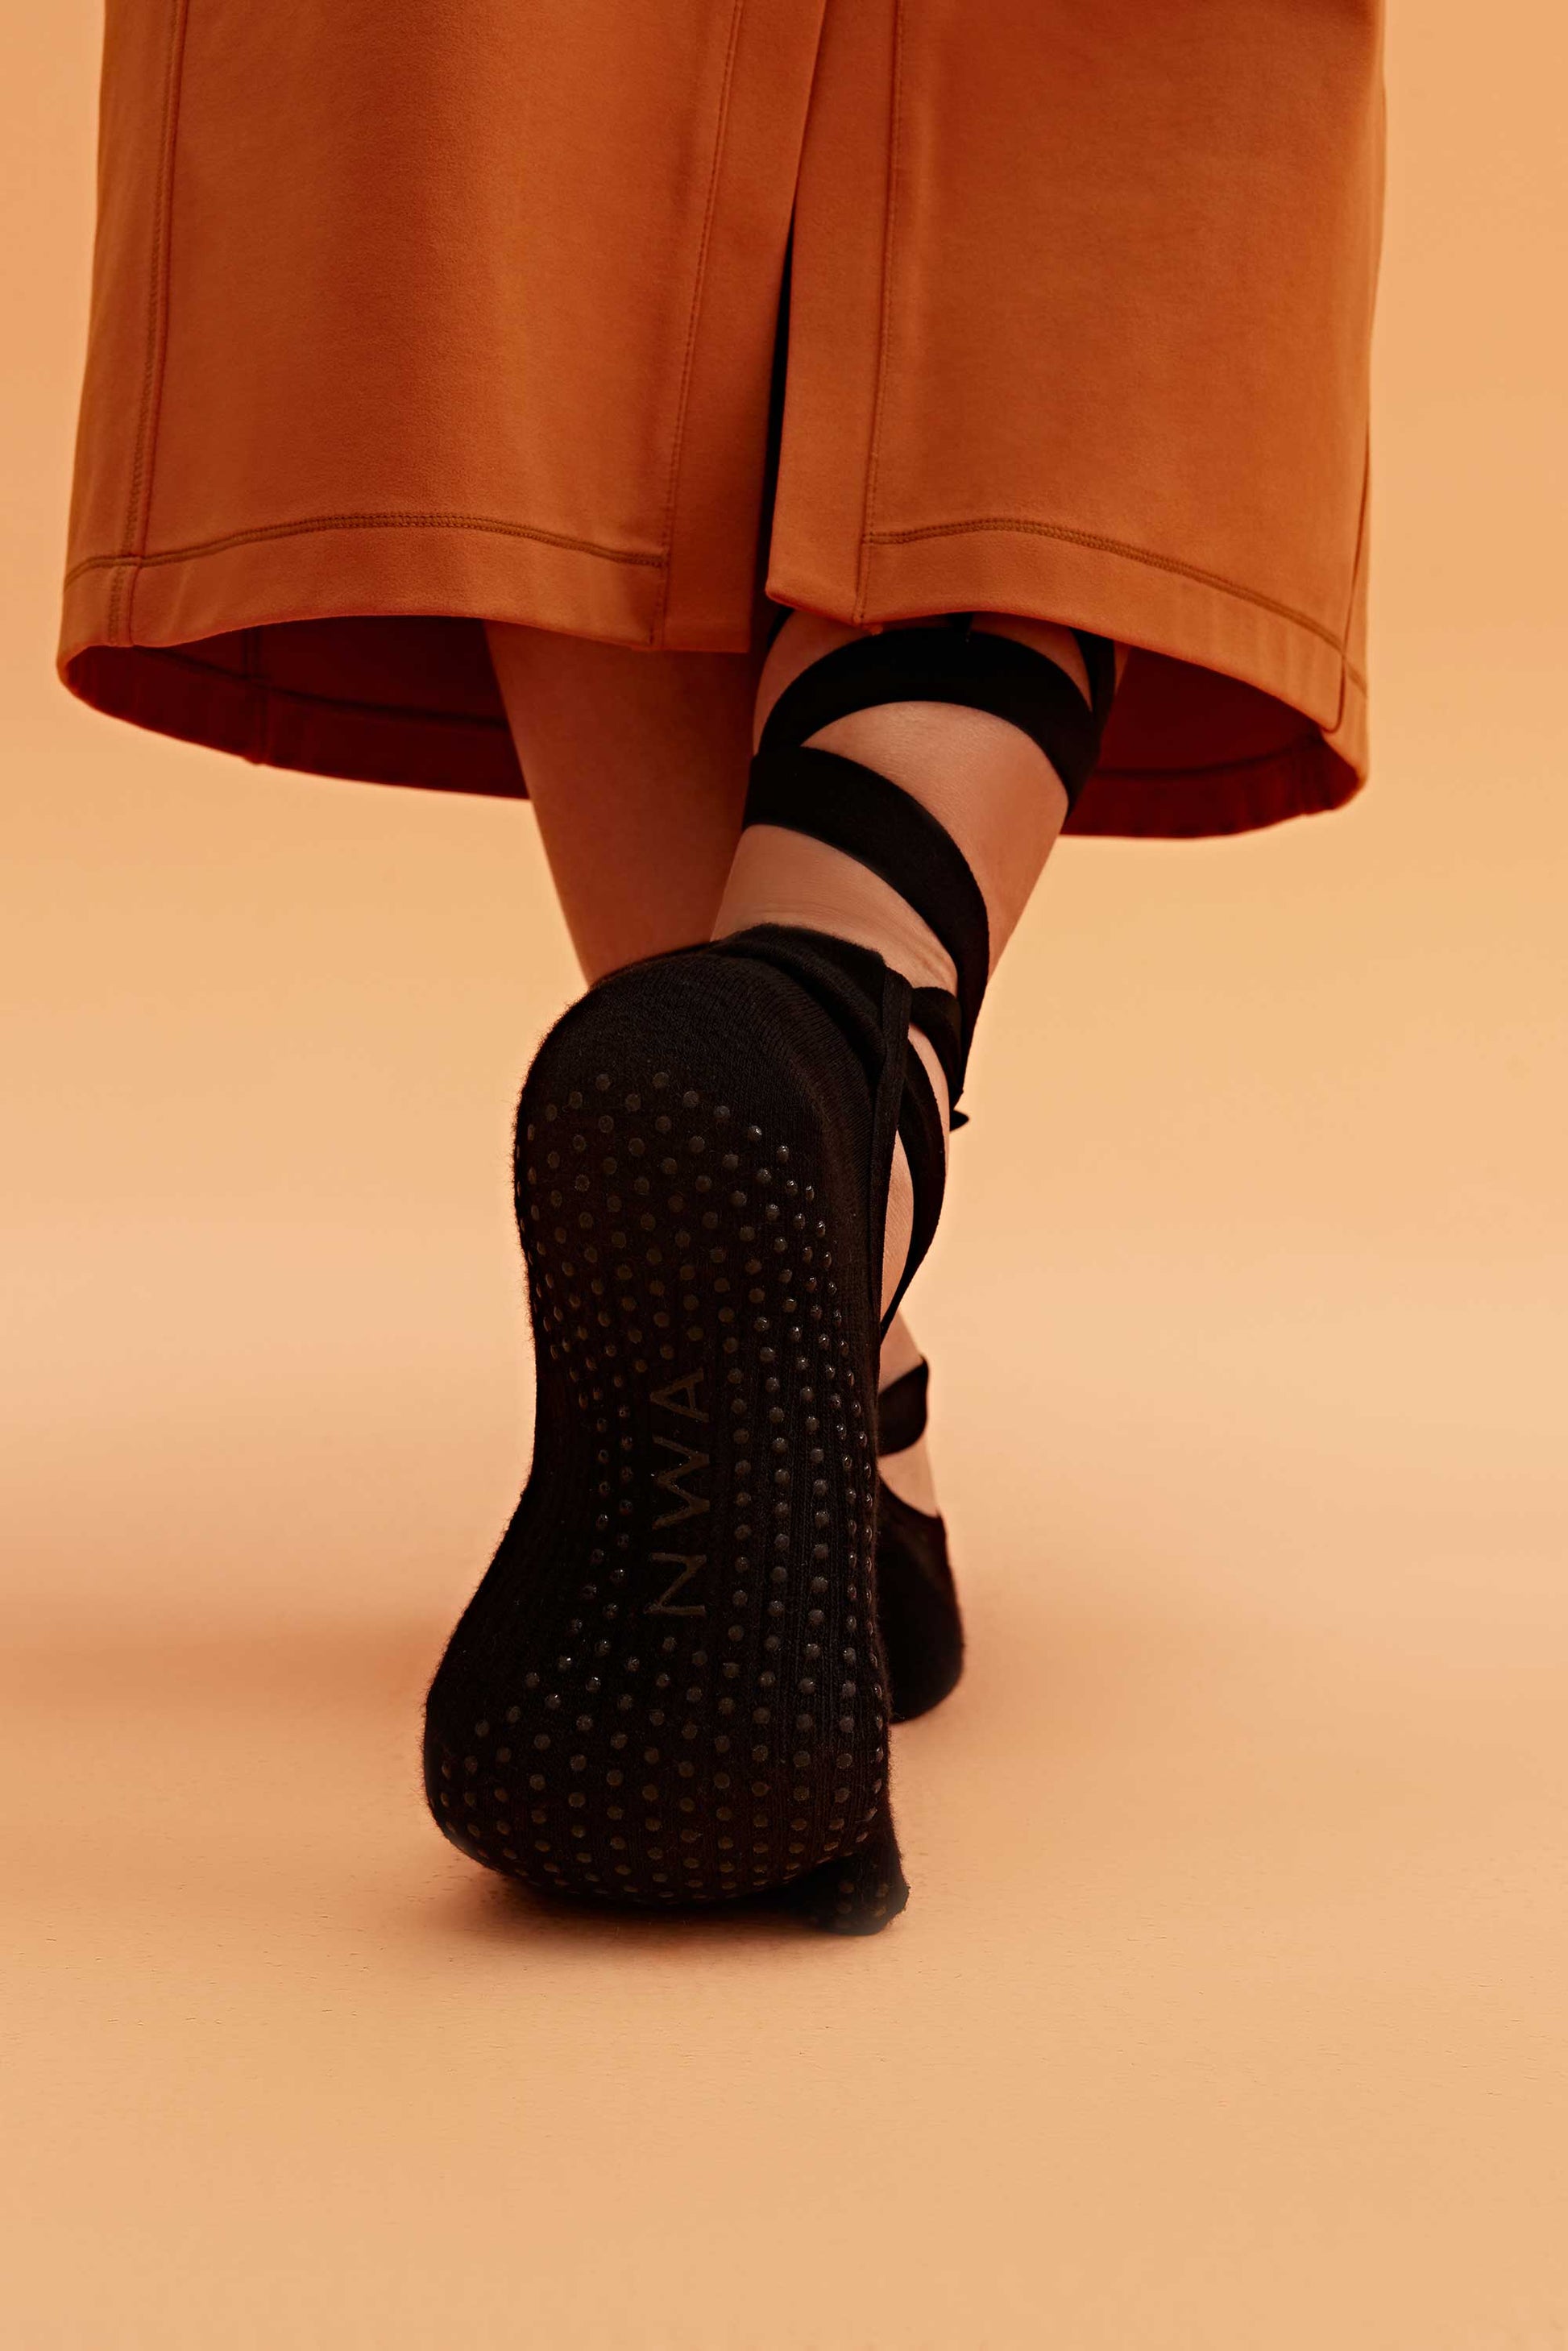 Kate Spade Chaussette Barre Socks Brand New NWT